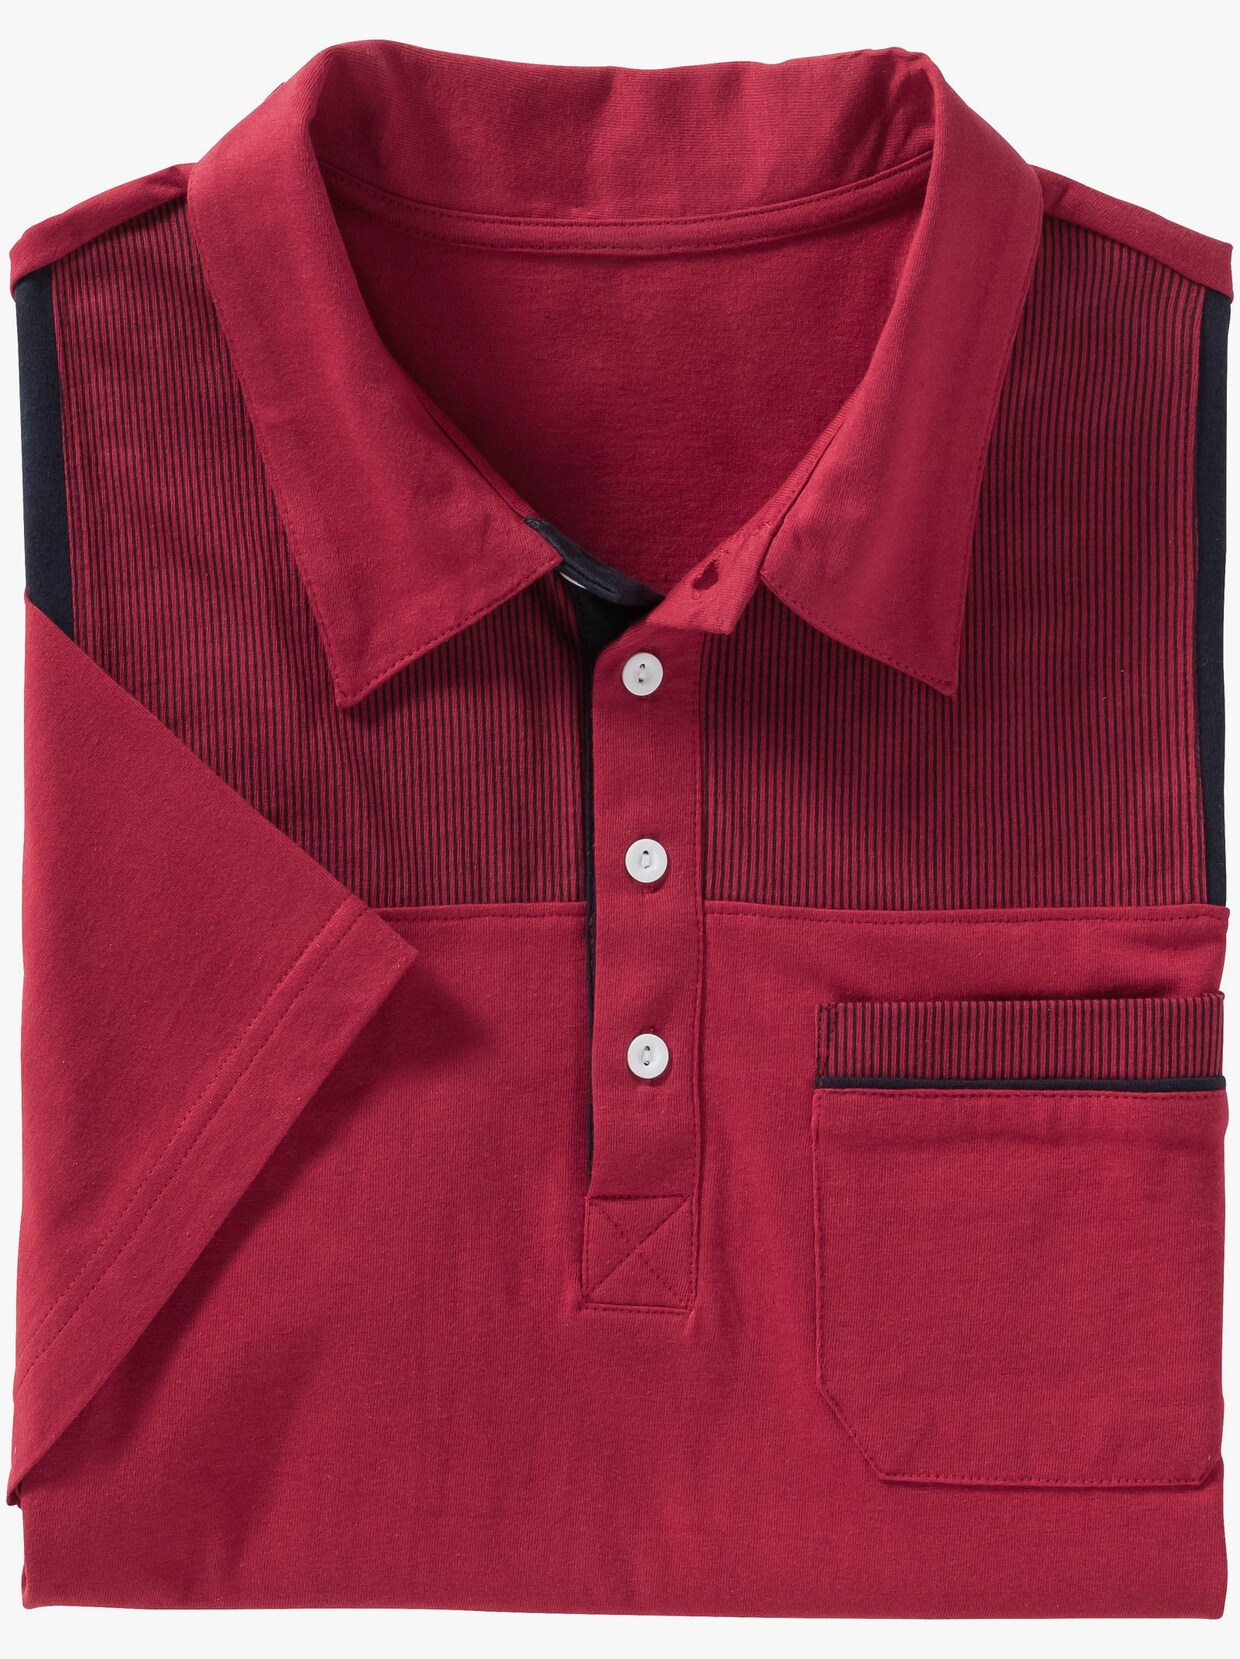 Poloshirt - rood/marine